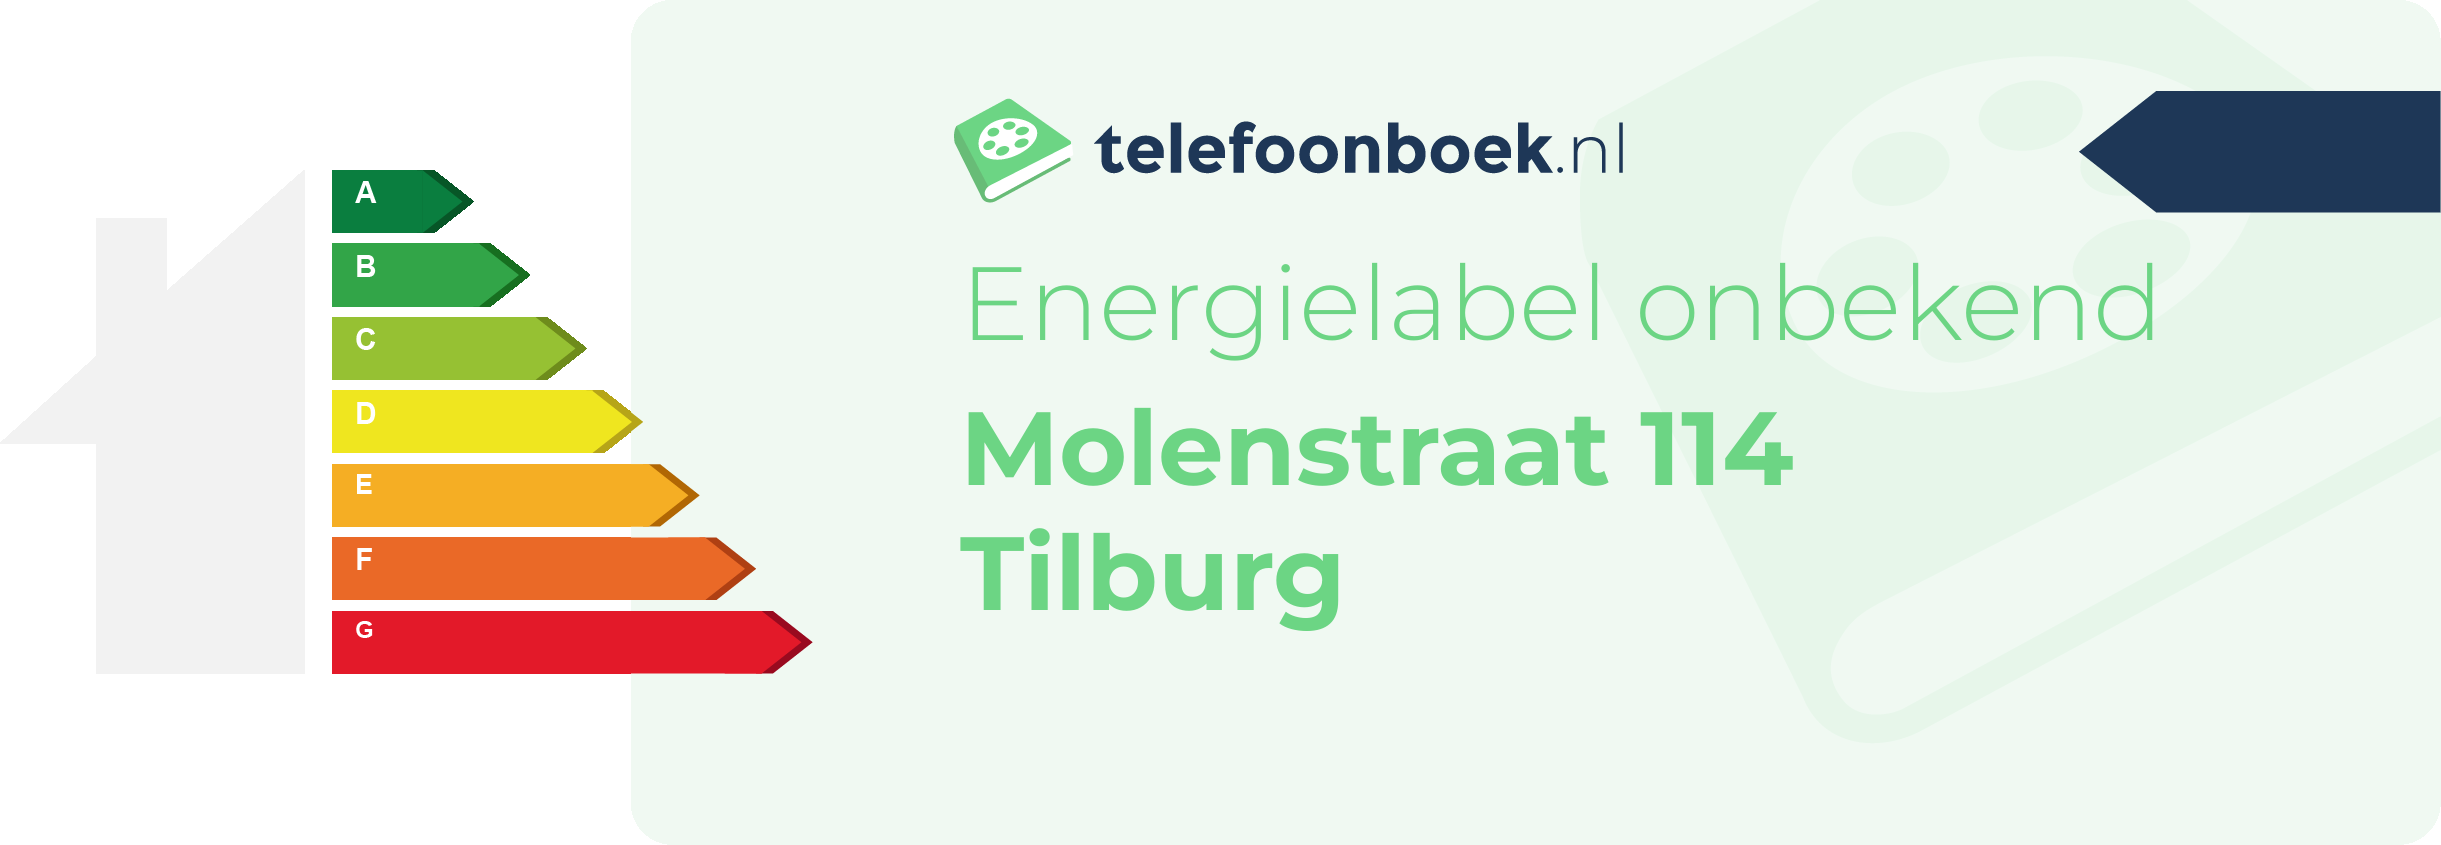 Energielabel Molenstraat 114 Tilburg